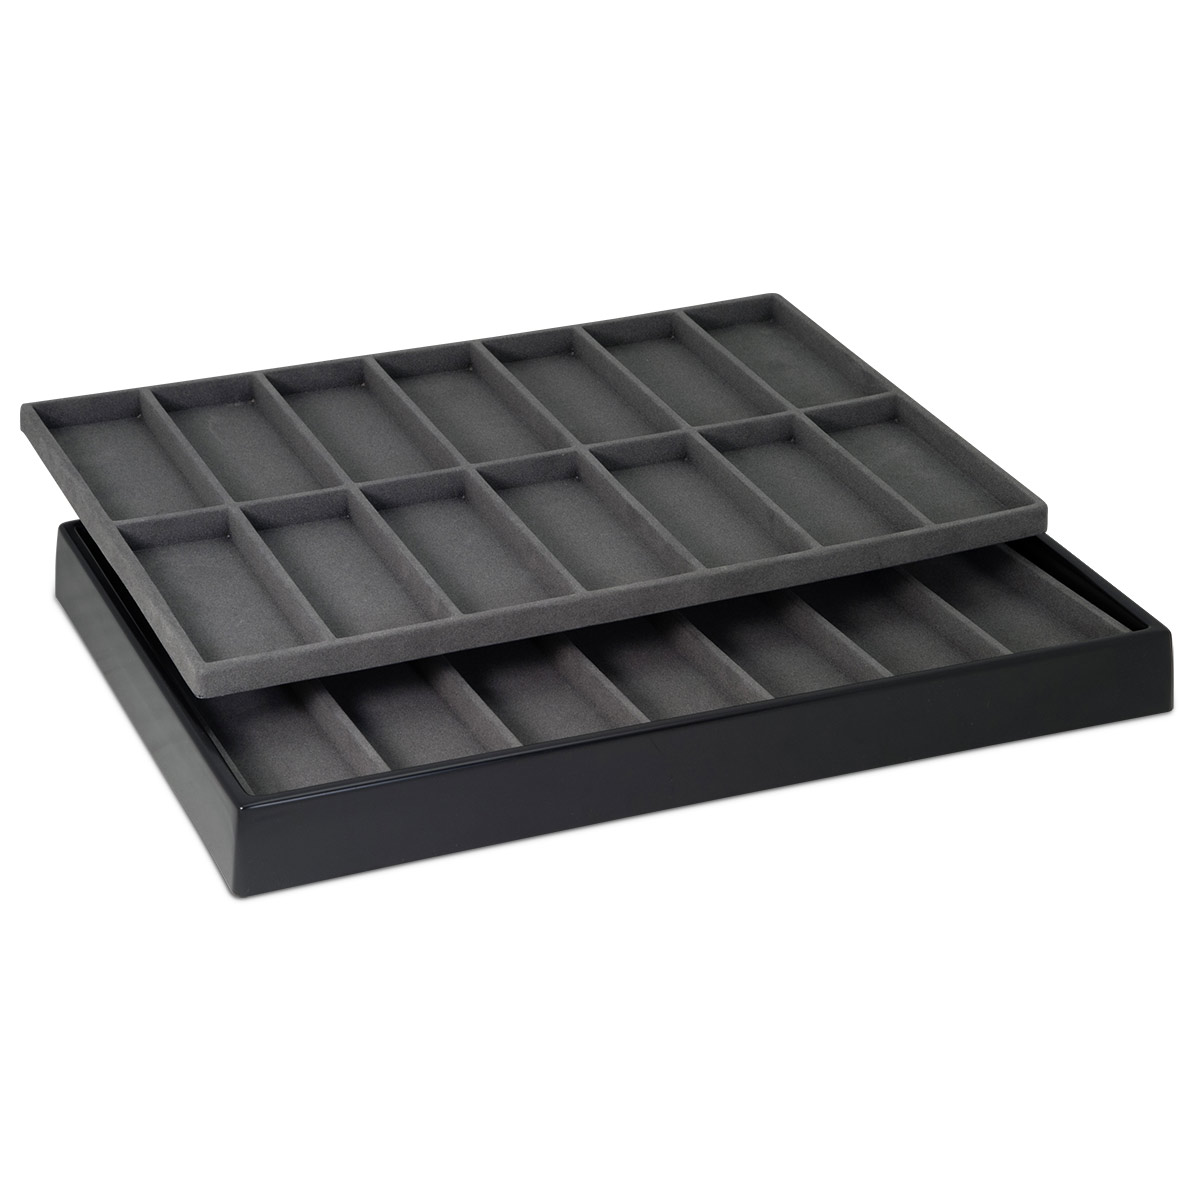 Großes Tablett, Kunststoff, schwarz, 461 x 320 x 40 mm